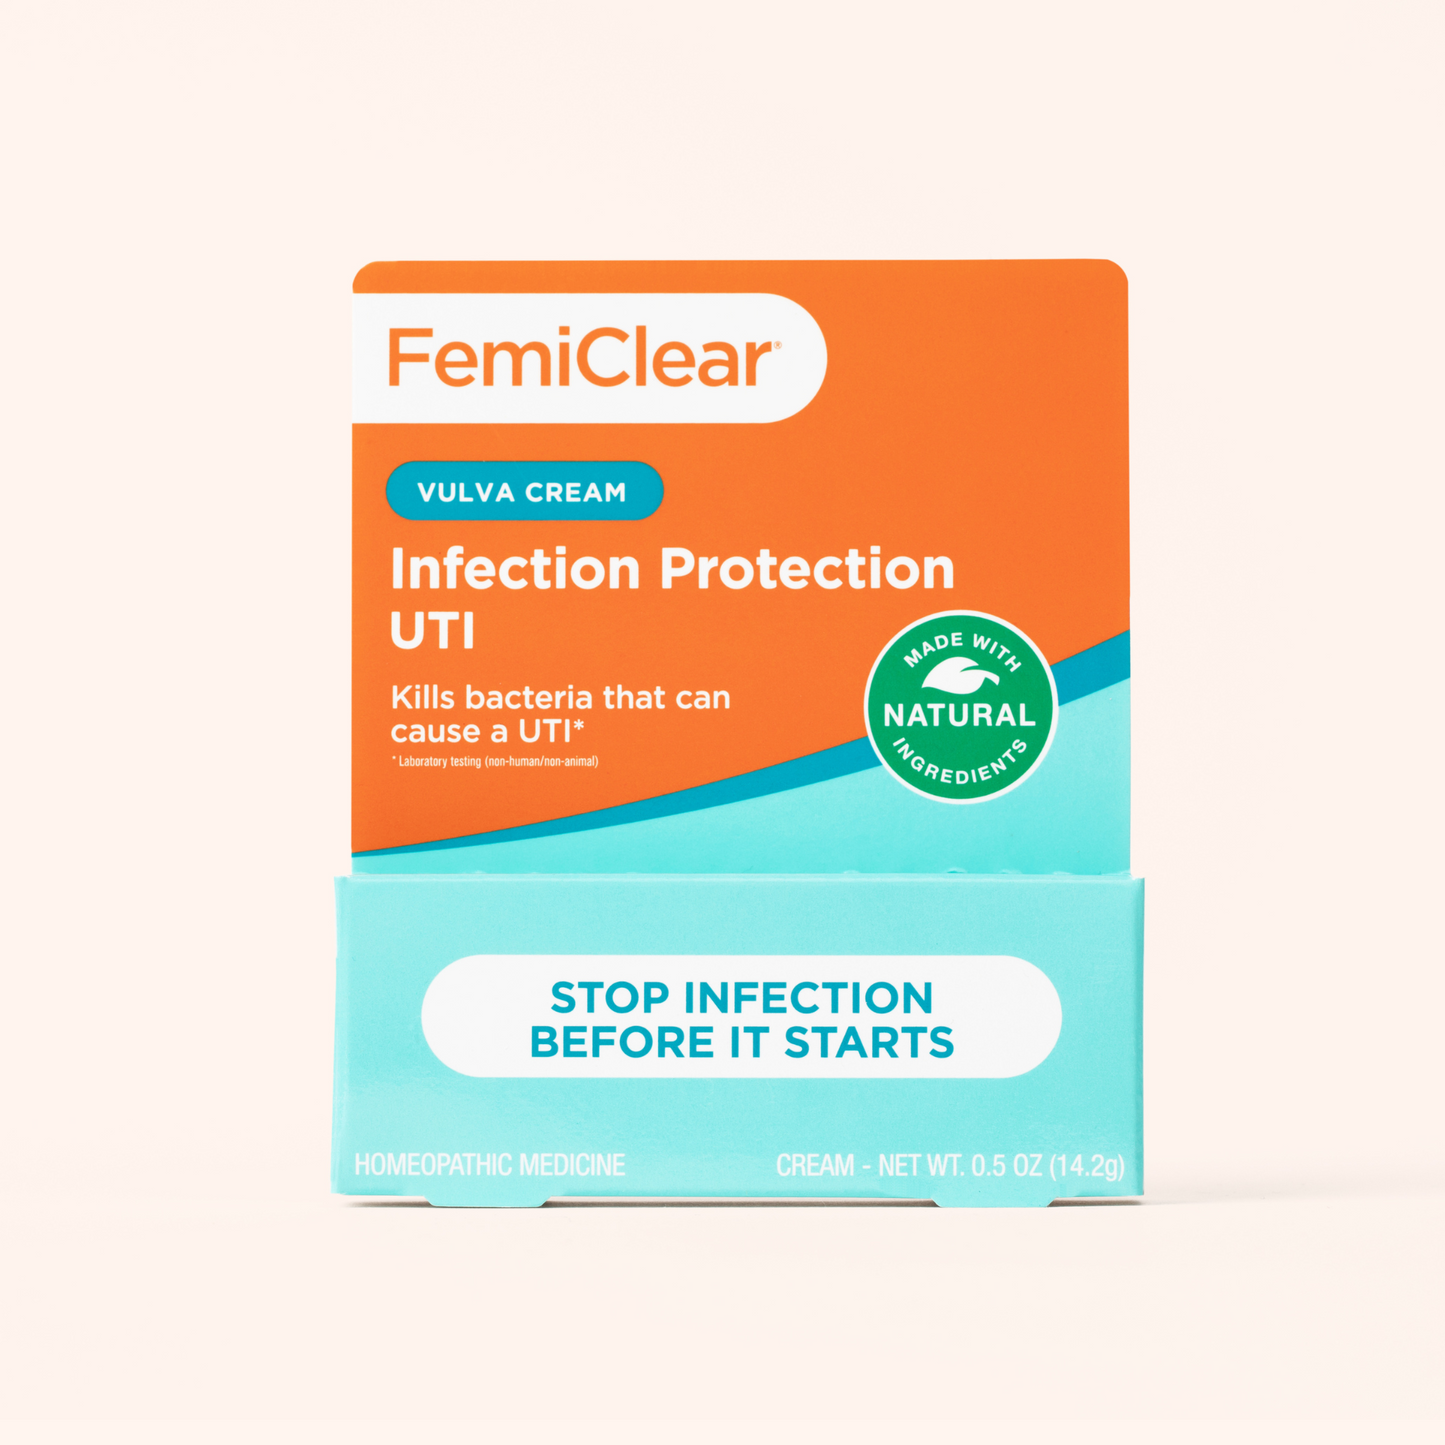 Daily Urinary Health Kit | FemiClear®